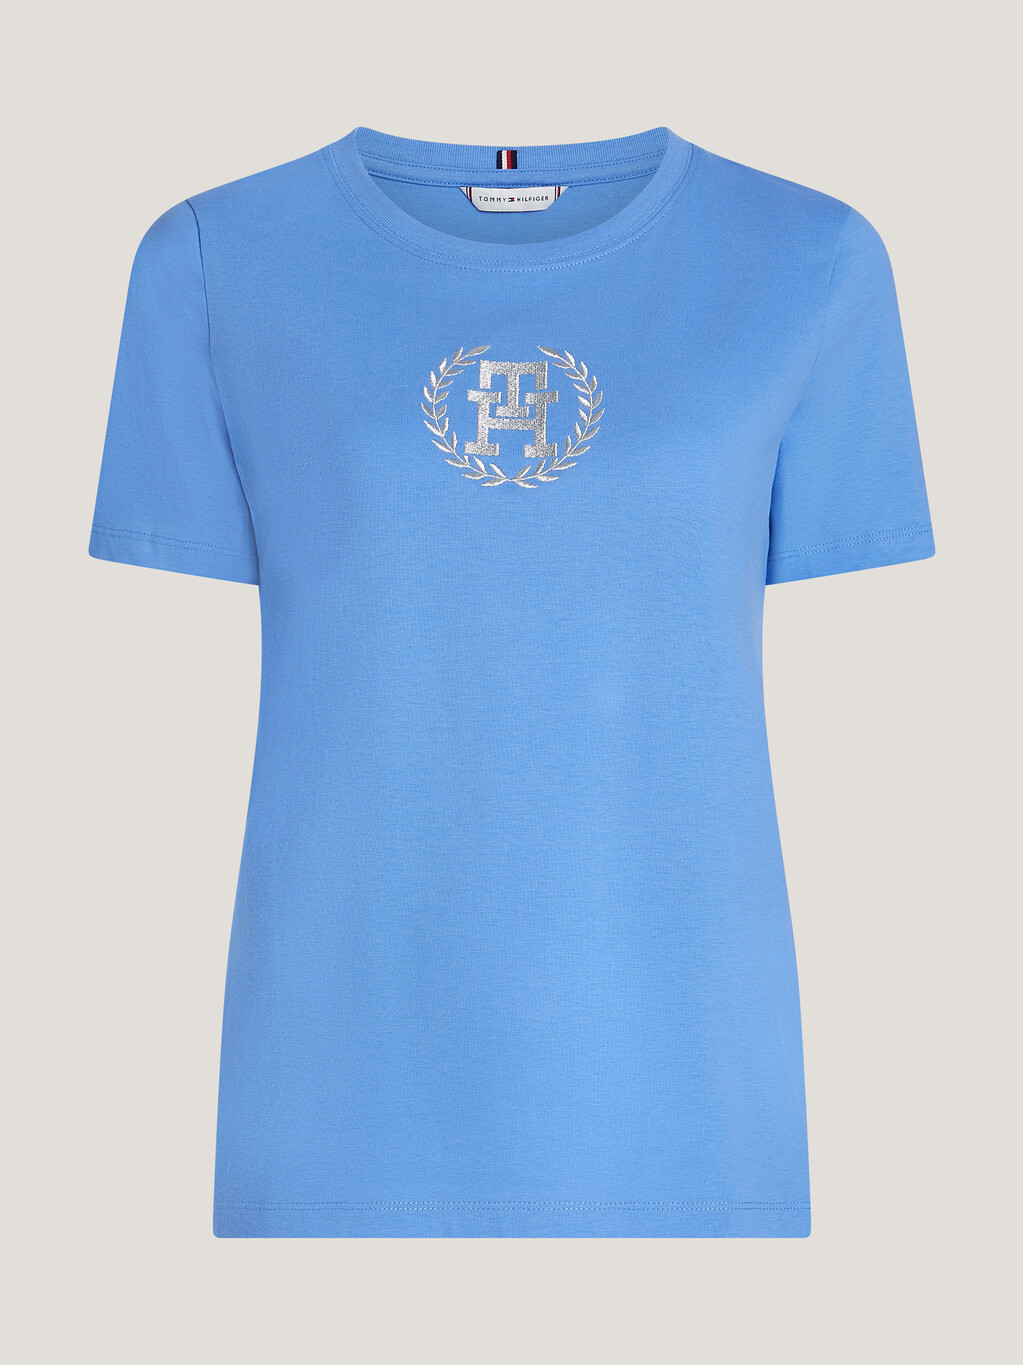 TH Monogram Crew Neck T-Shirt, Blue Spell, hi-res